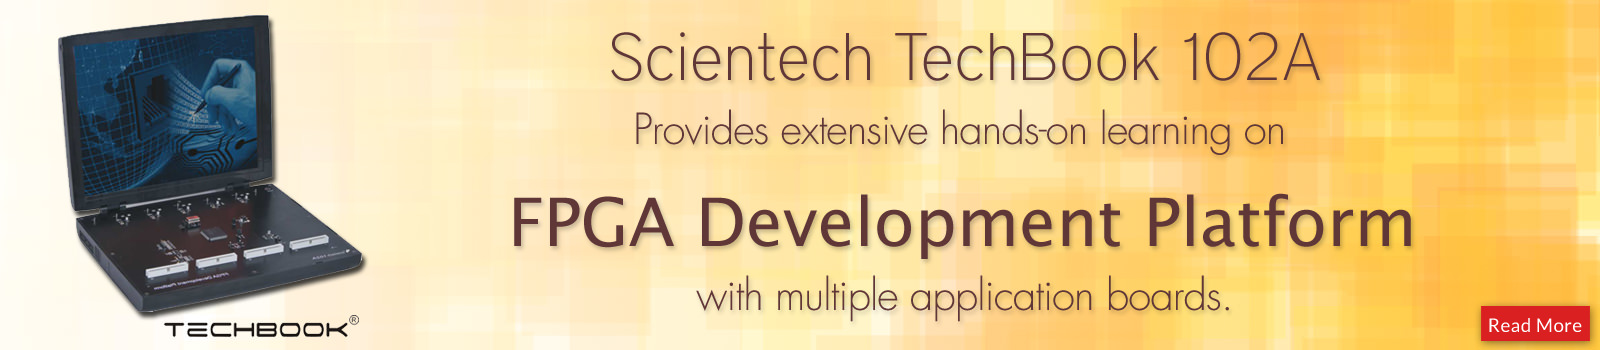 FPGA Development Platform Board - Scientech 102A